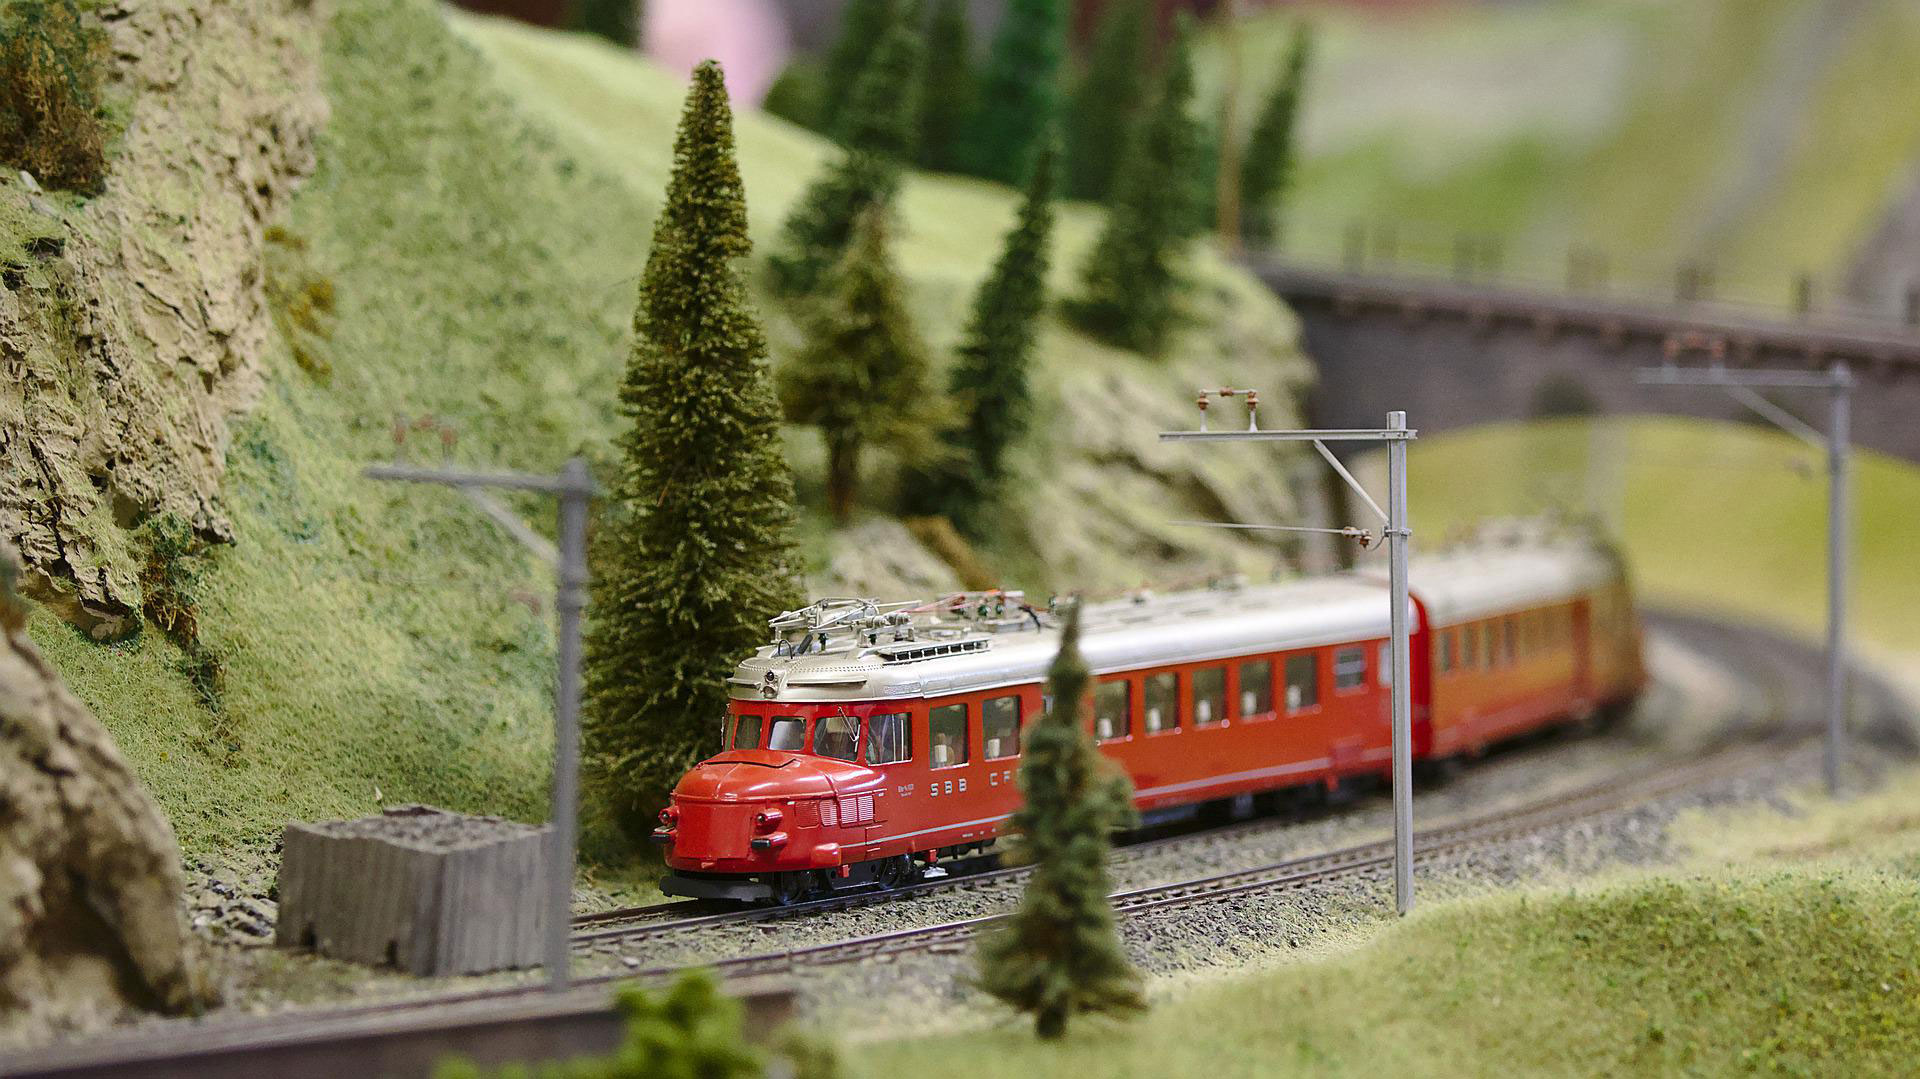 Model train on model train tracks on railway layout